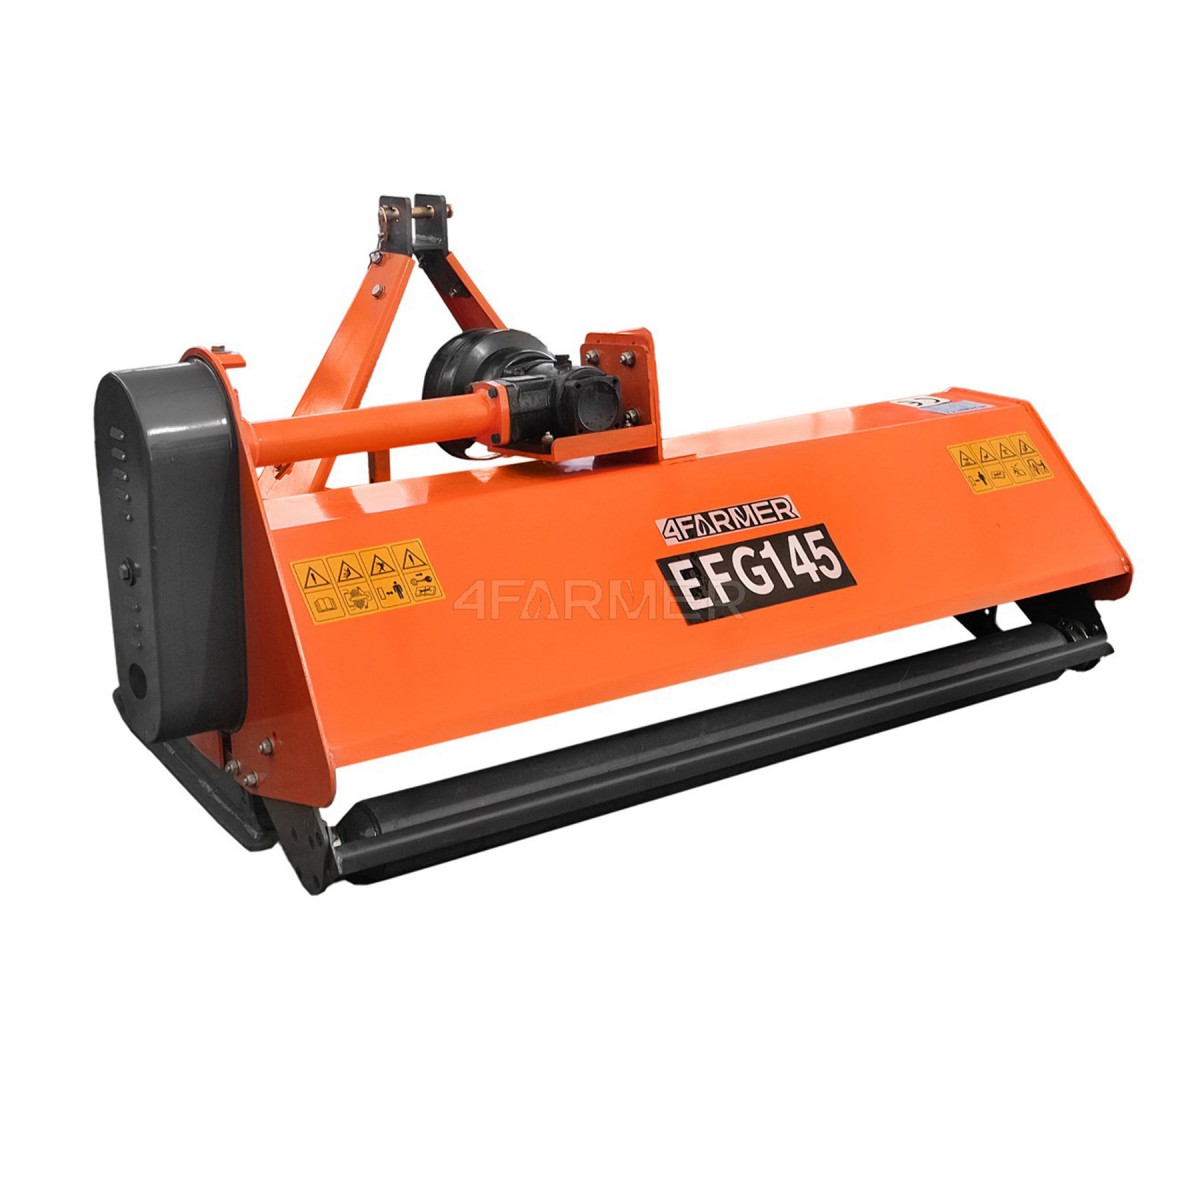 EFG 135 4FARMER flail mower - orange